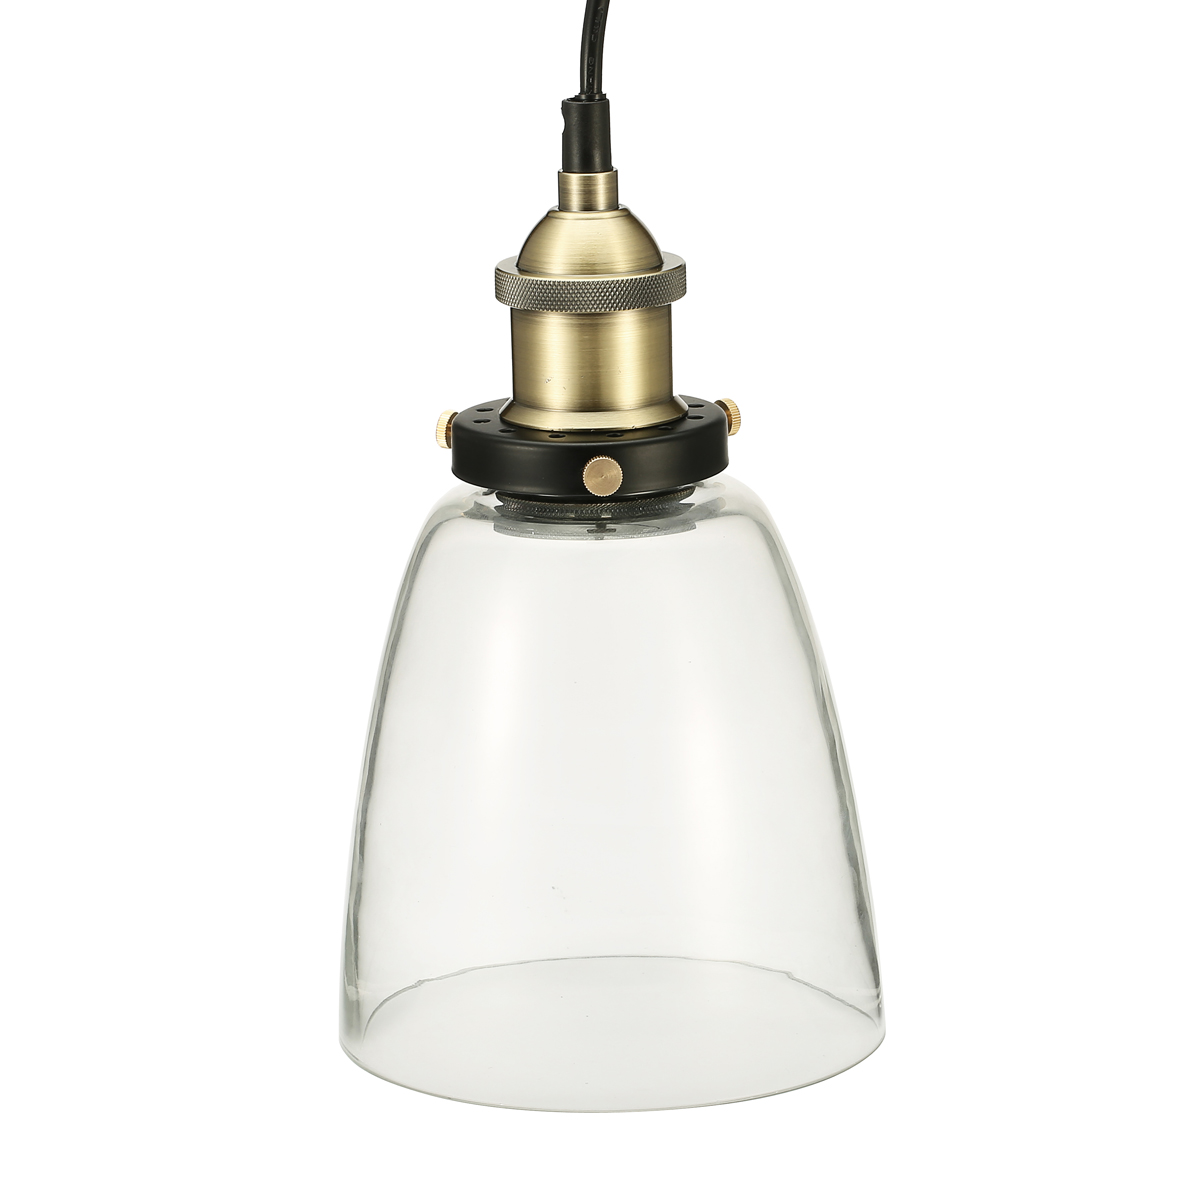 KINGSO-110V-E26E27-Vintage-Industrial-Pendant-Light-Bell-like-Glass-Shade-Without-Bulb-1896142-8